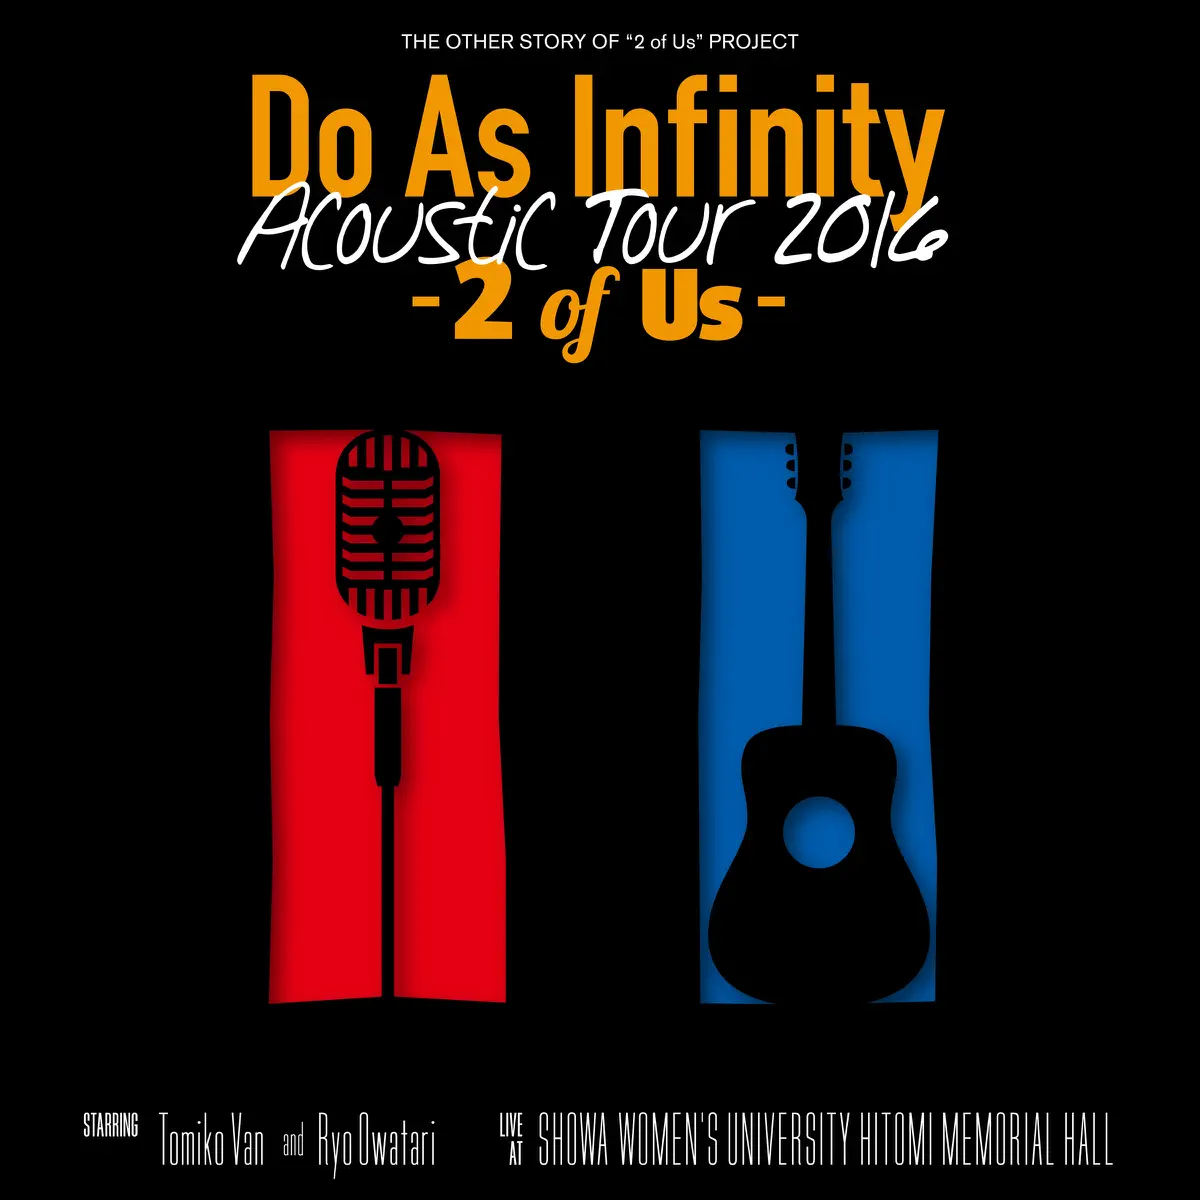 大無限樂團 Do As Infinity - Do As Infinity Acoustic Tour 2016 -2 of Us- (2016) [iTunes Plus AAC M4A]-新房子